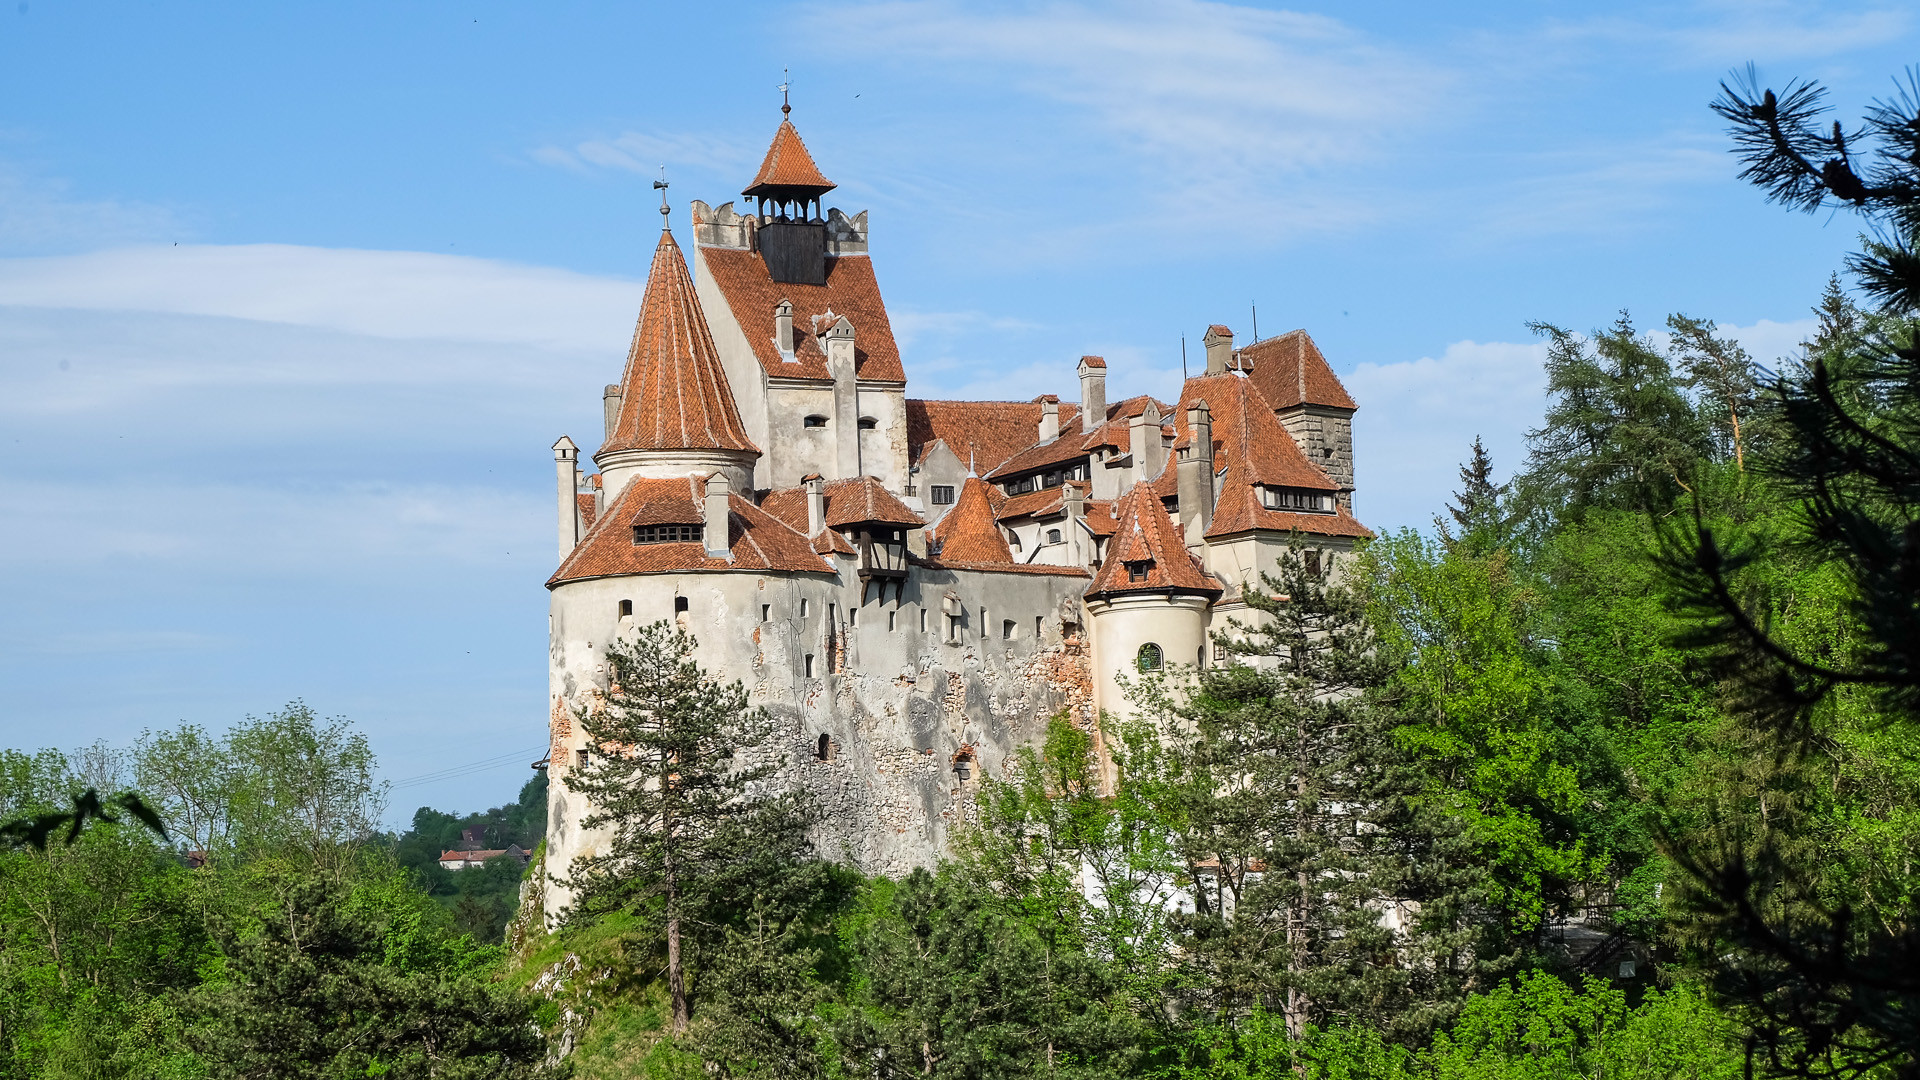 1920x1080 Transylvania day trip - Two famous castles